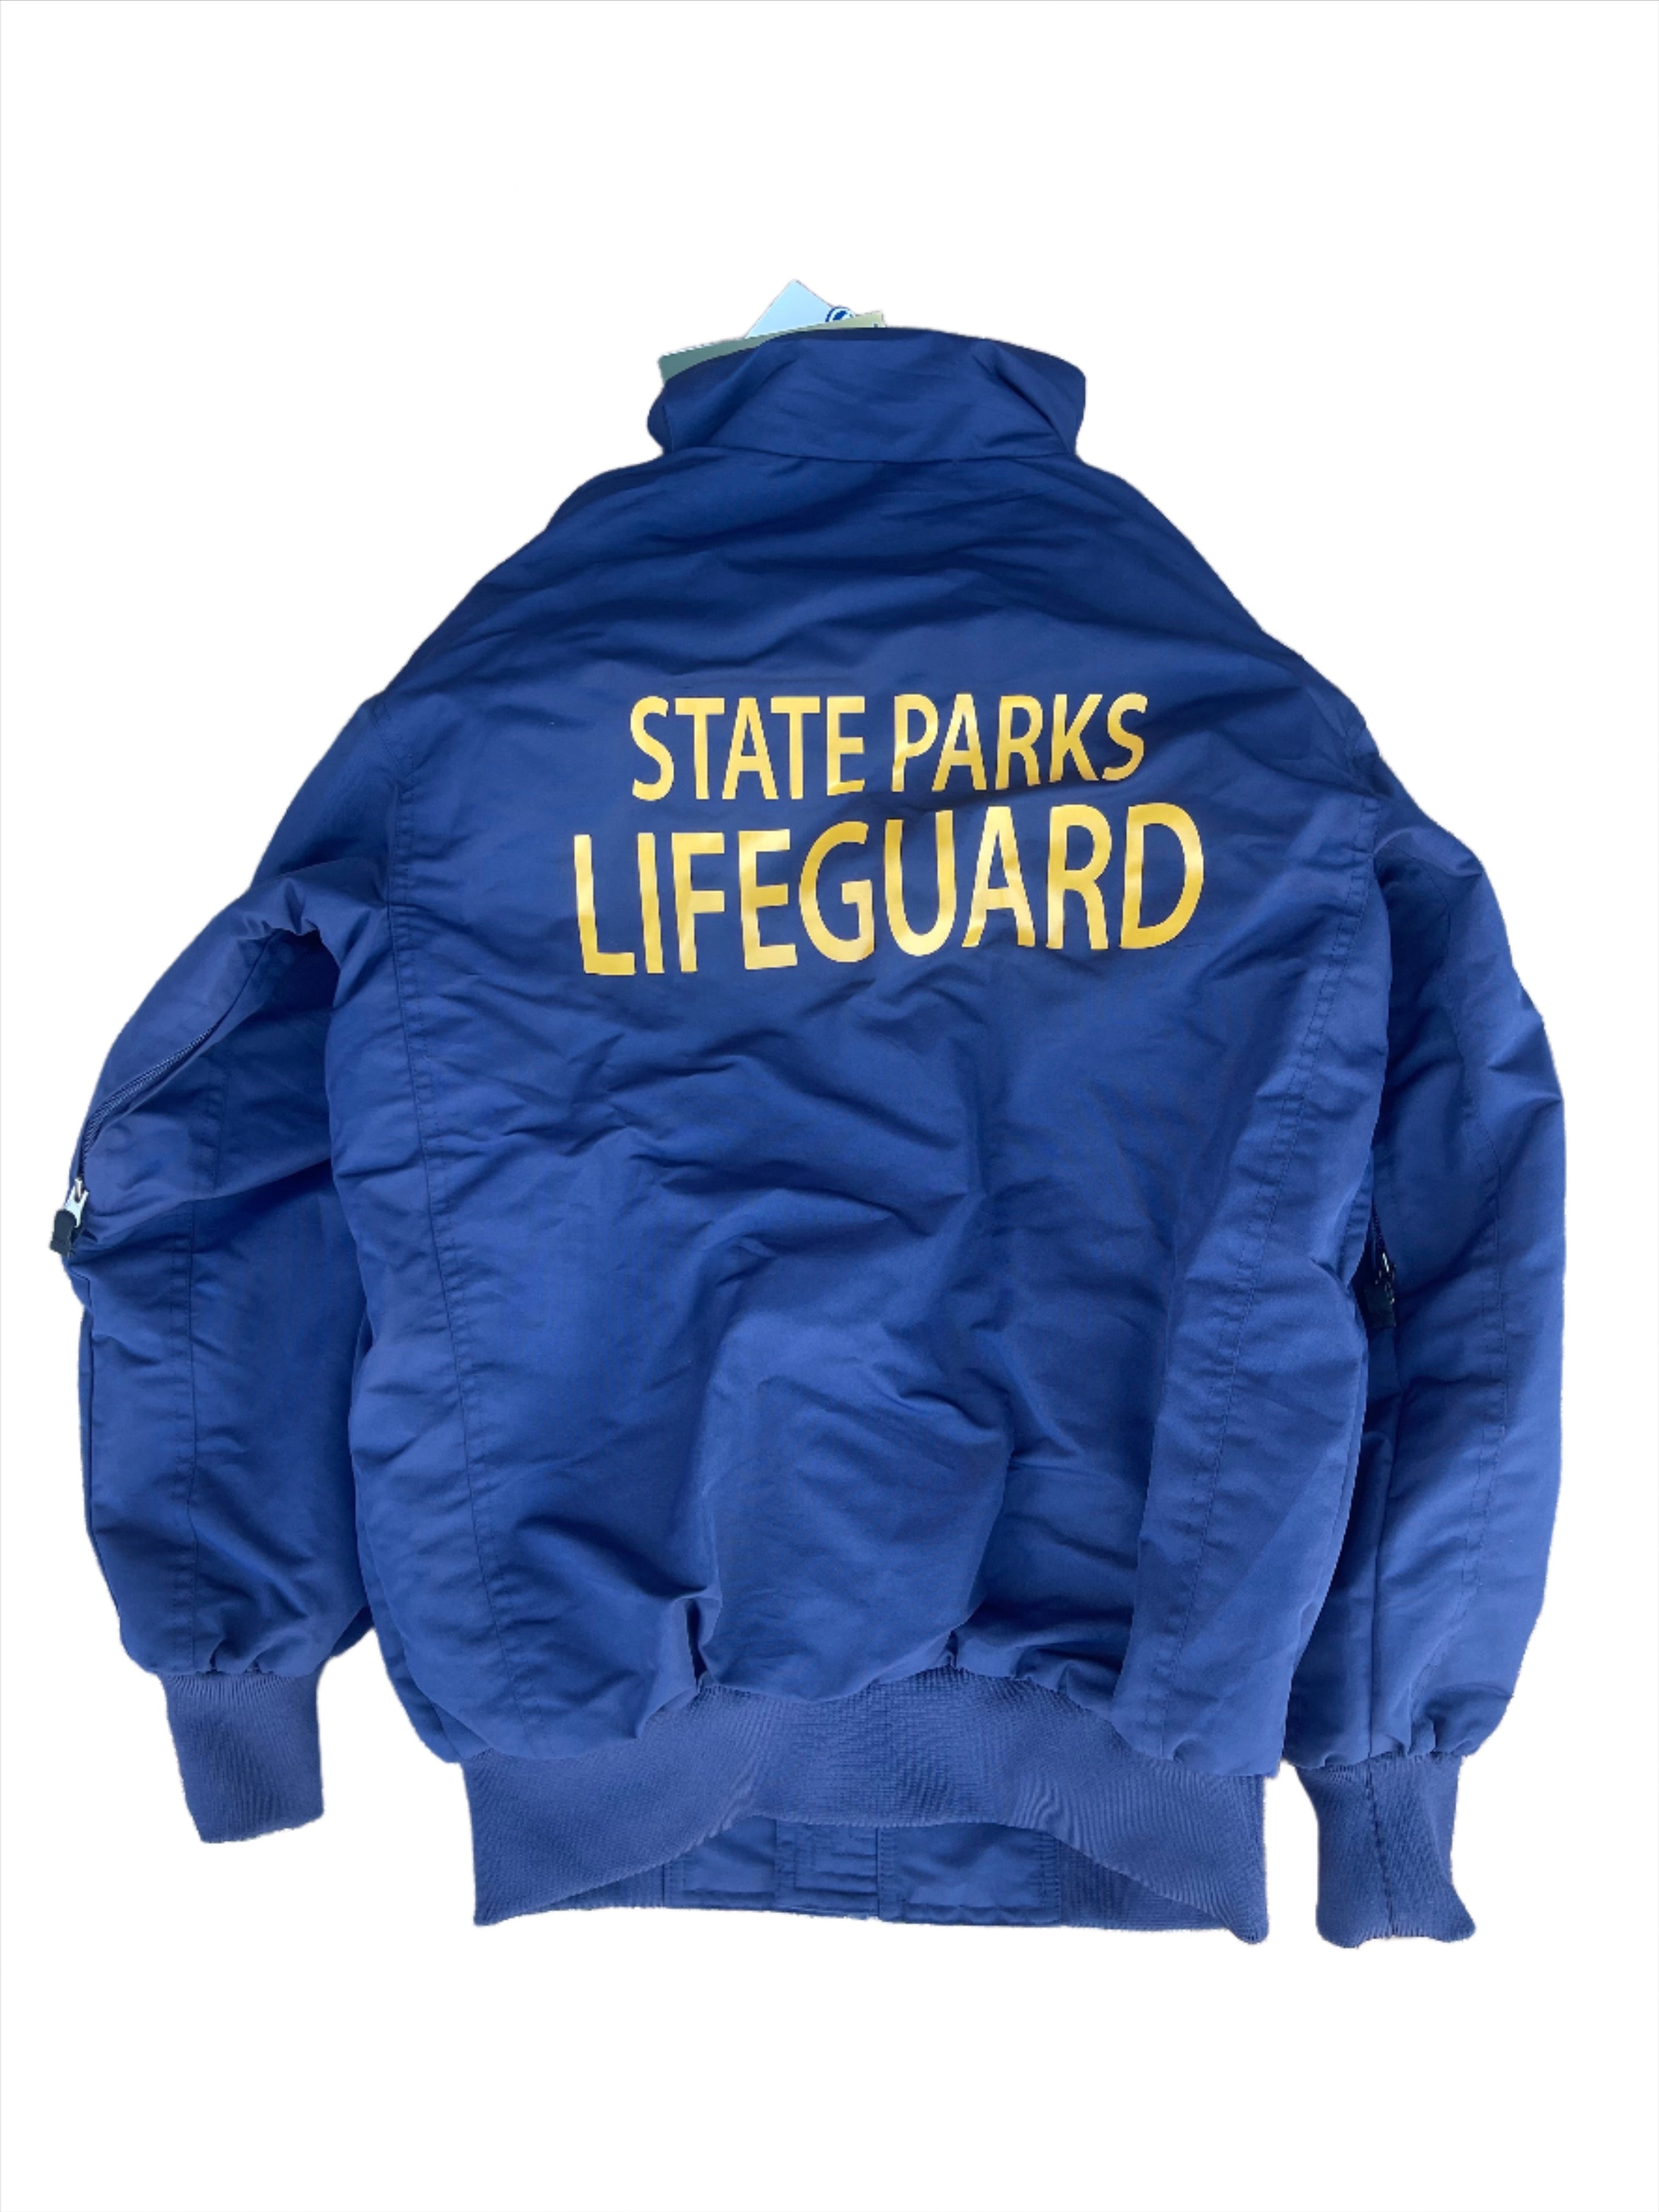 CA STATE PARKS Lifeguard Jacket